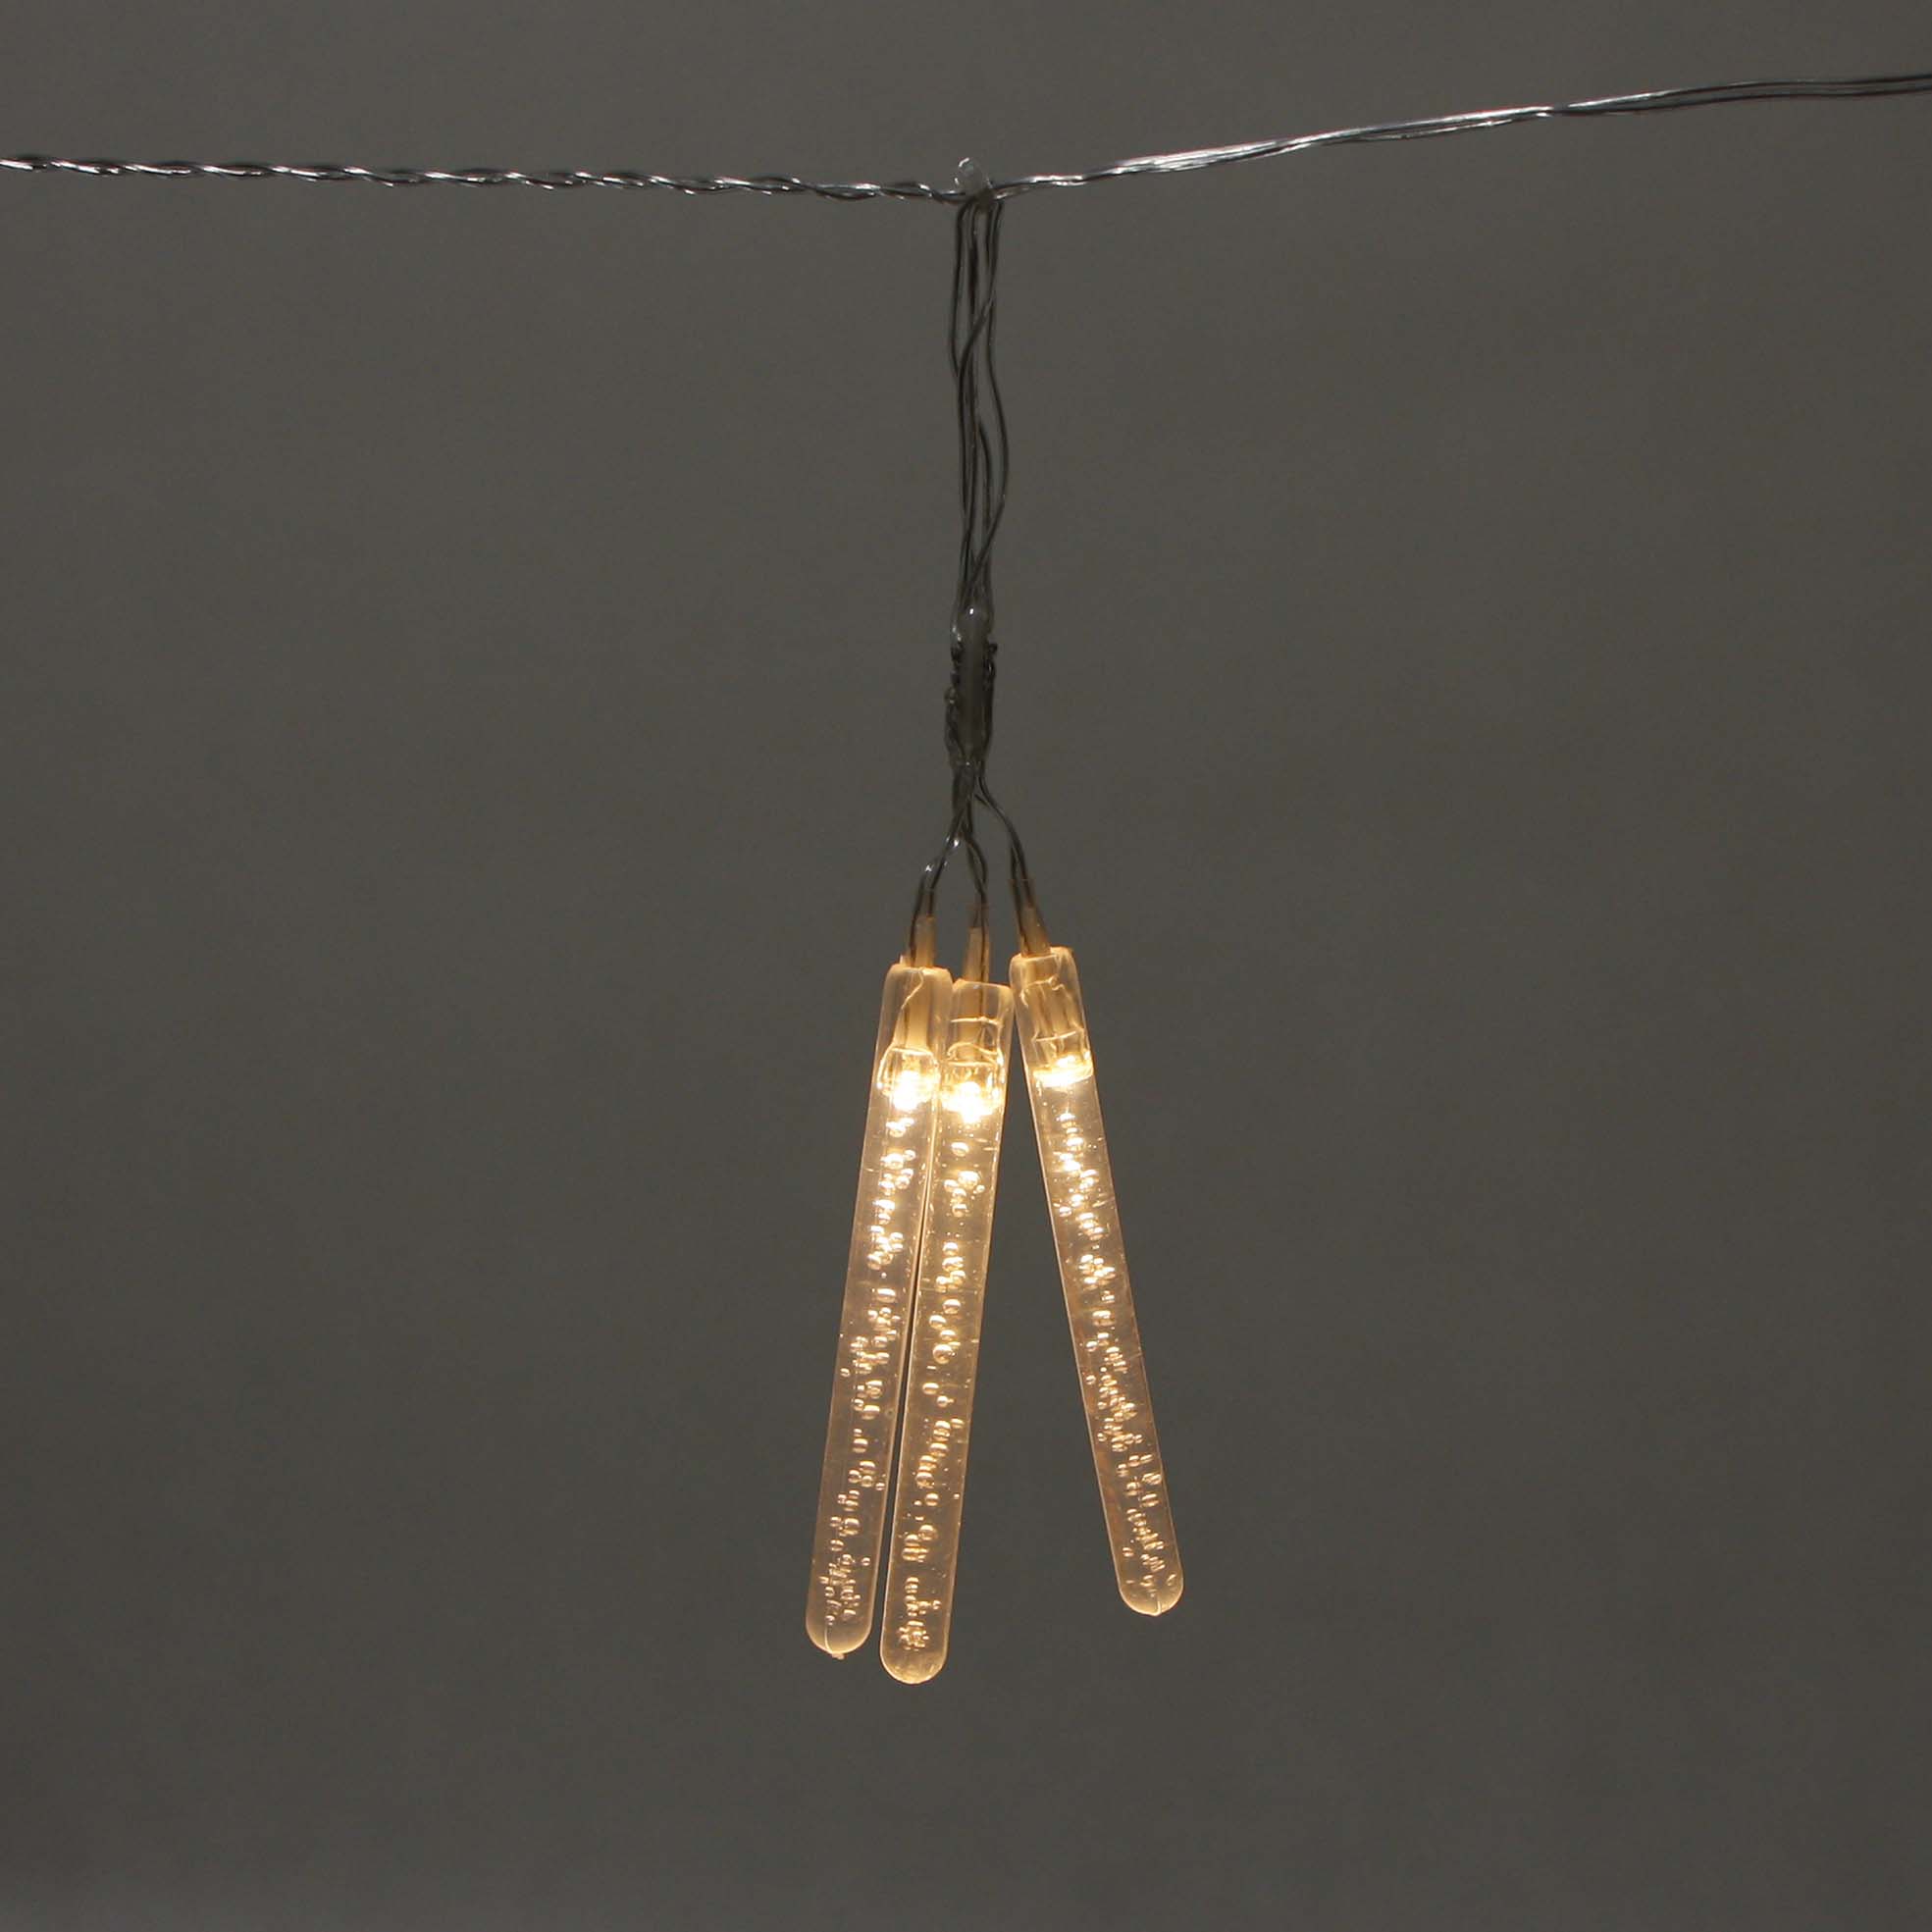 Decorative Umbrella String Lights Solar for Patio 